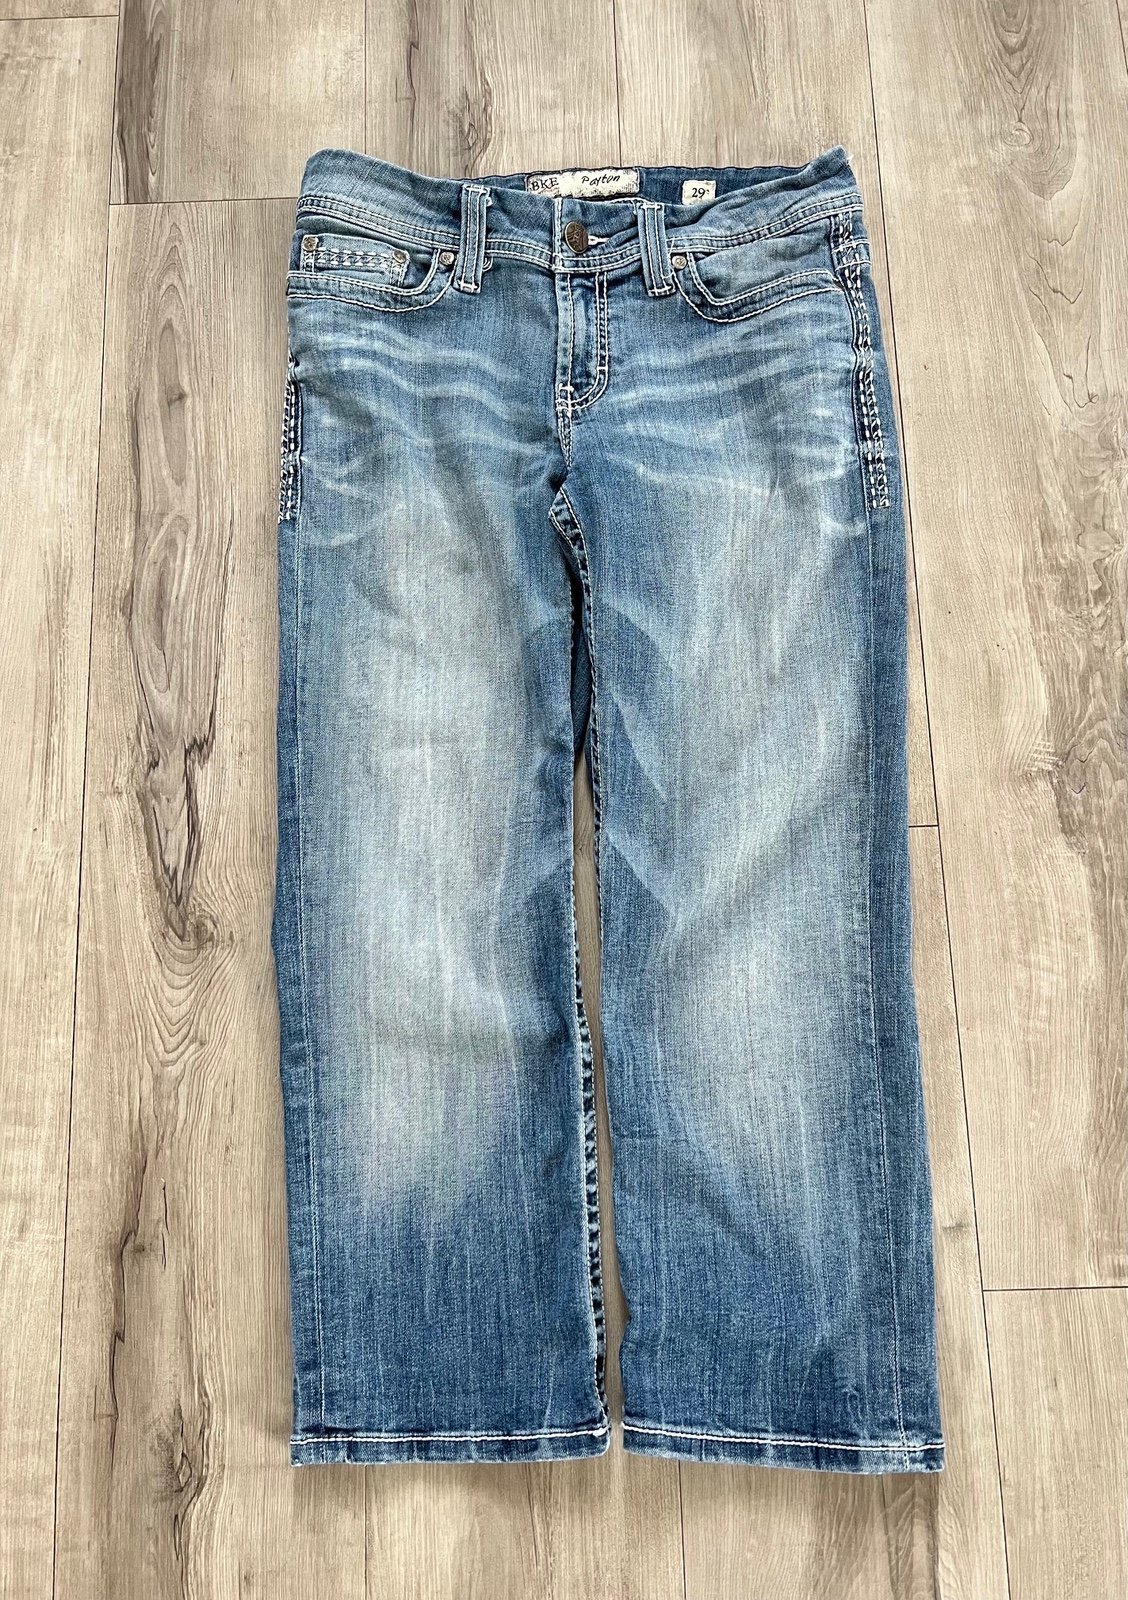 Authentic BKE capri jeans size 29 Fi9c0kfLv Zero Profit